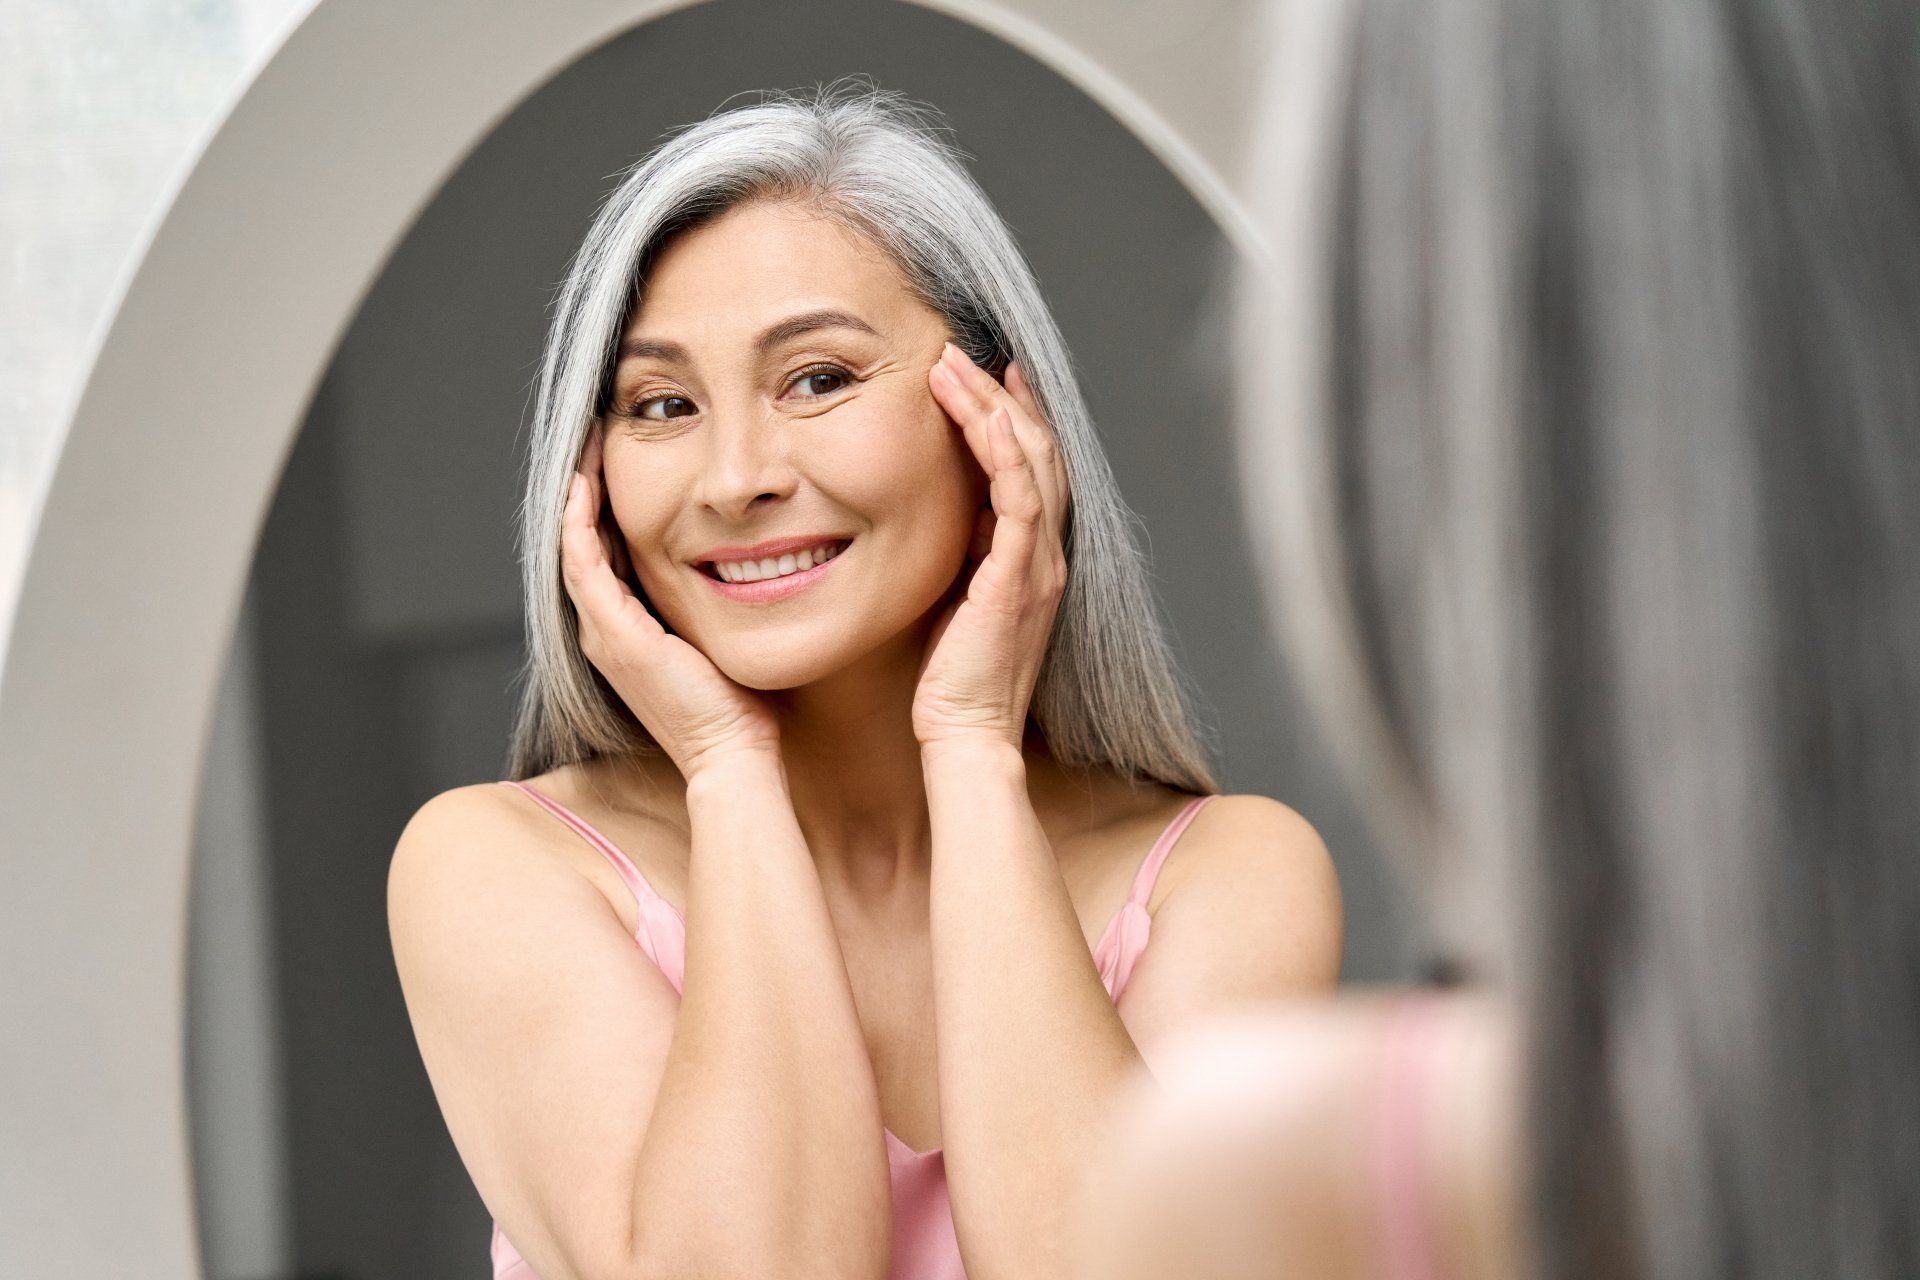 Woman smiling in mirror admiring her skin